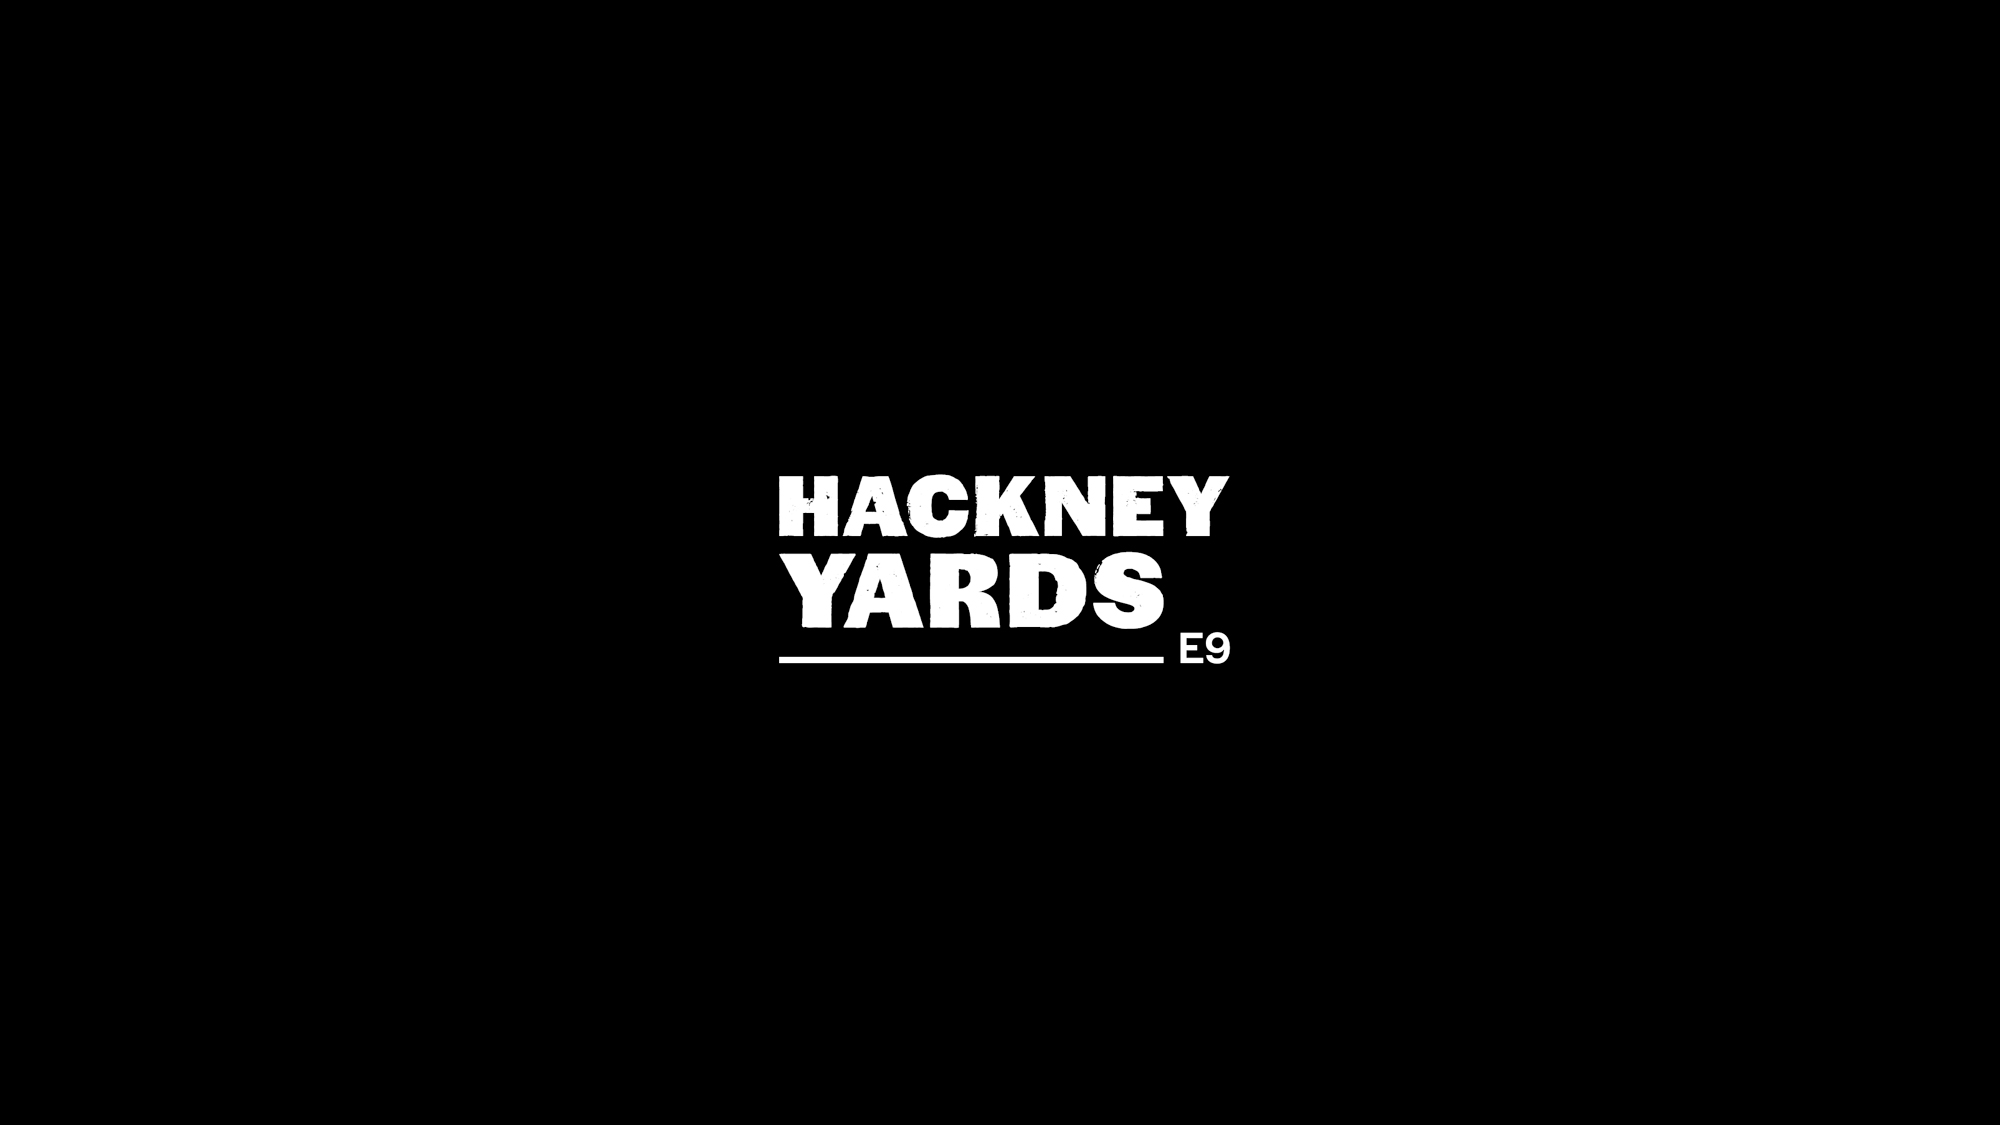 Coming soon - Hackney Yards E9